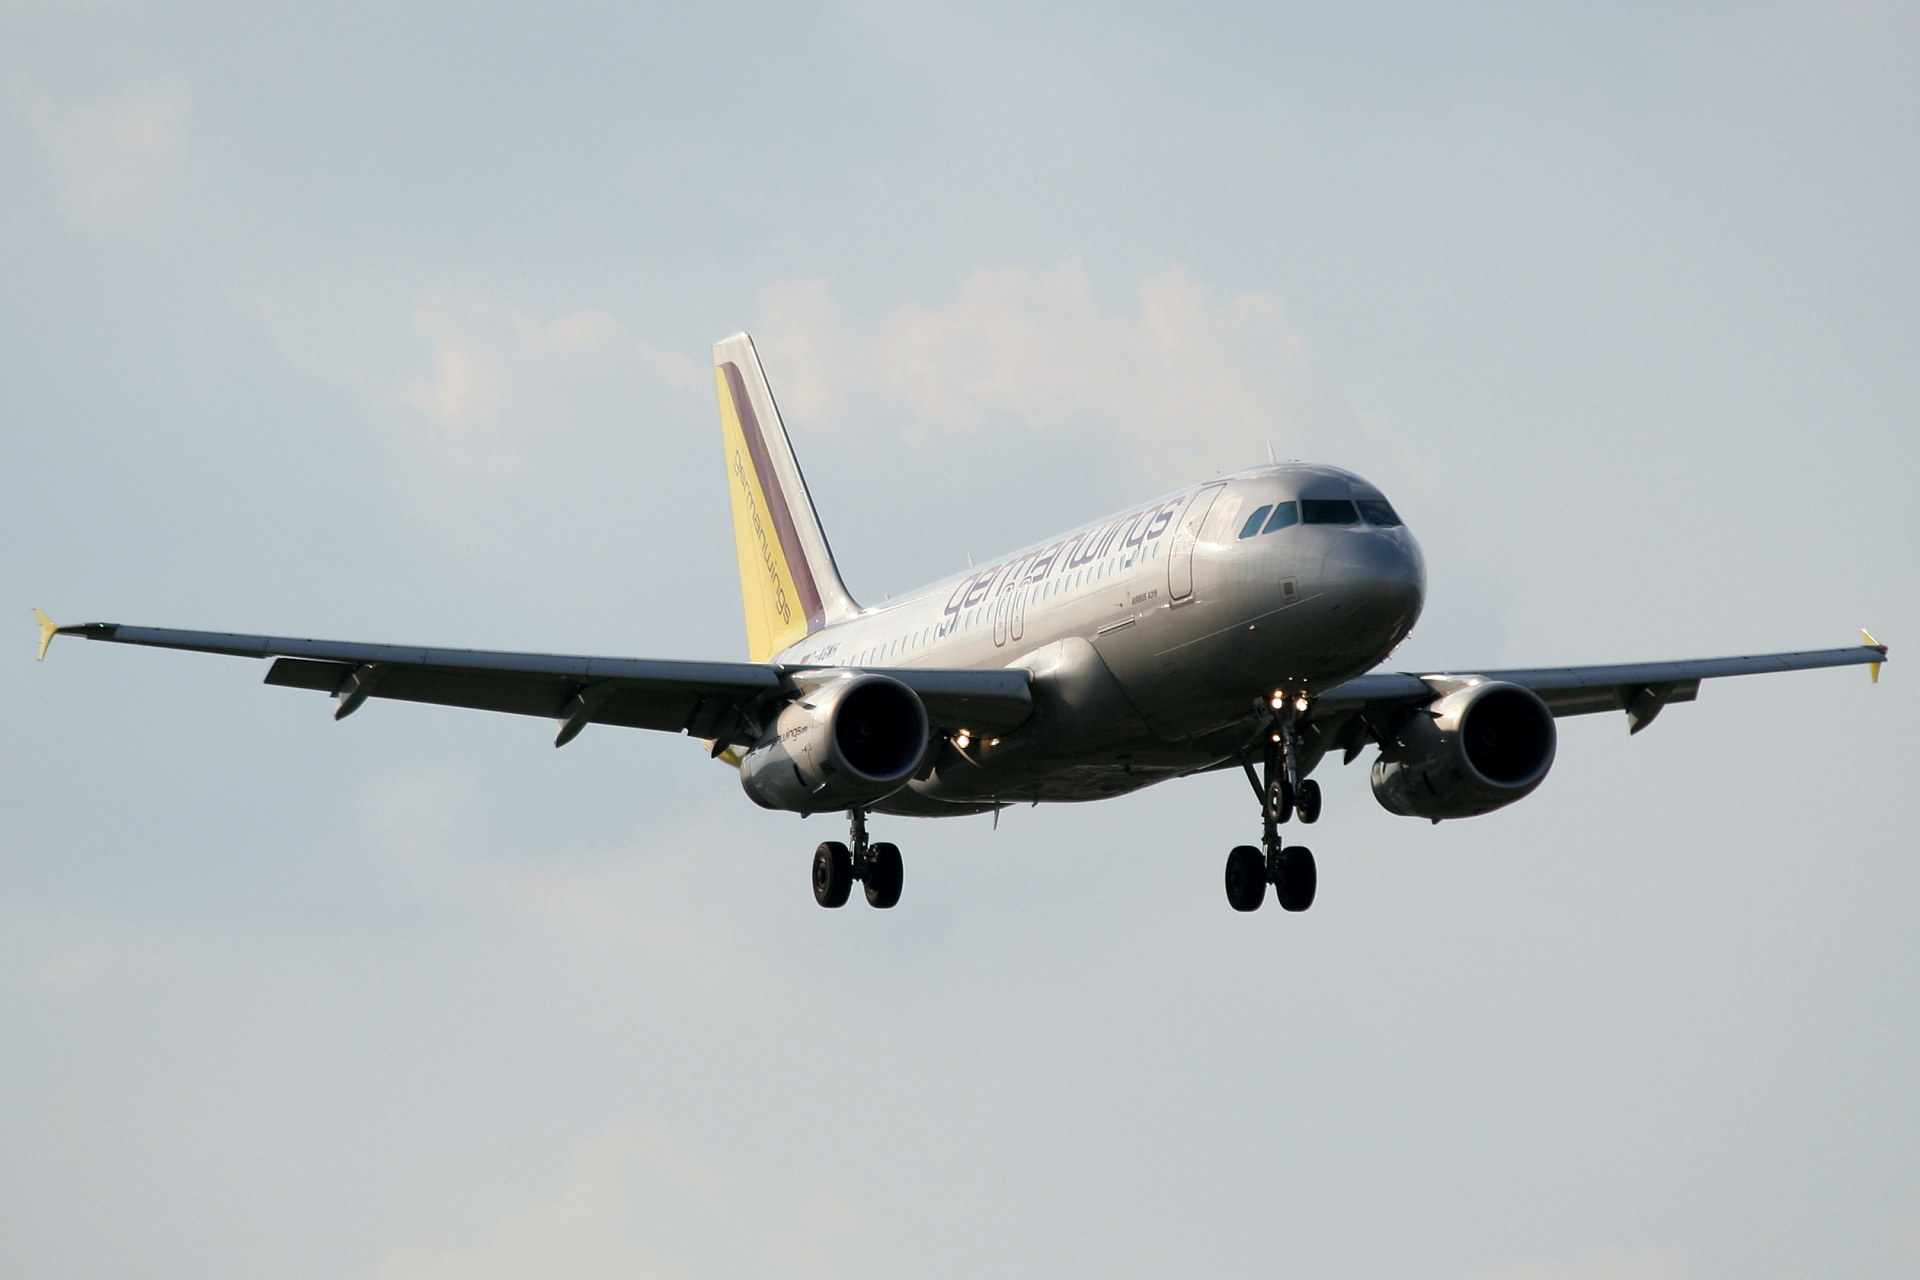 D-AGWH (Aircraft » EPWA Spotting » Airbus A319-100 » Germanwings)